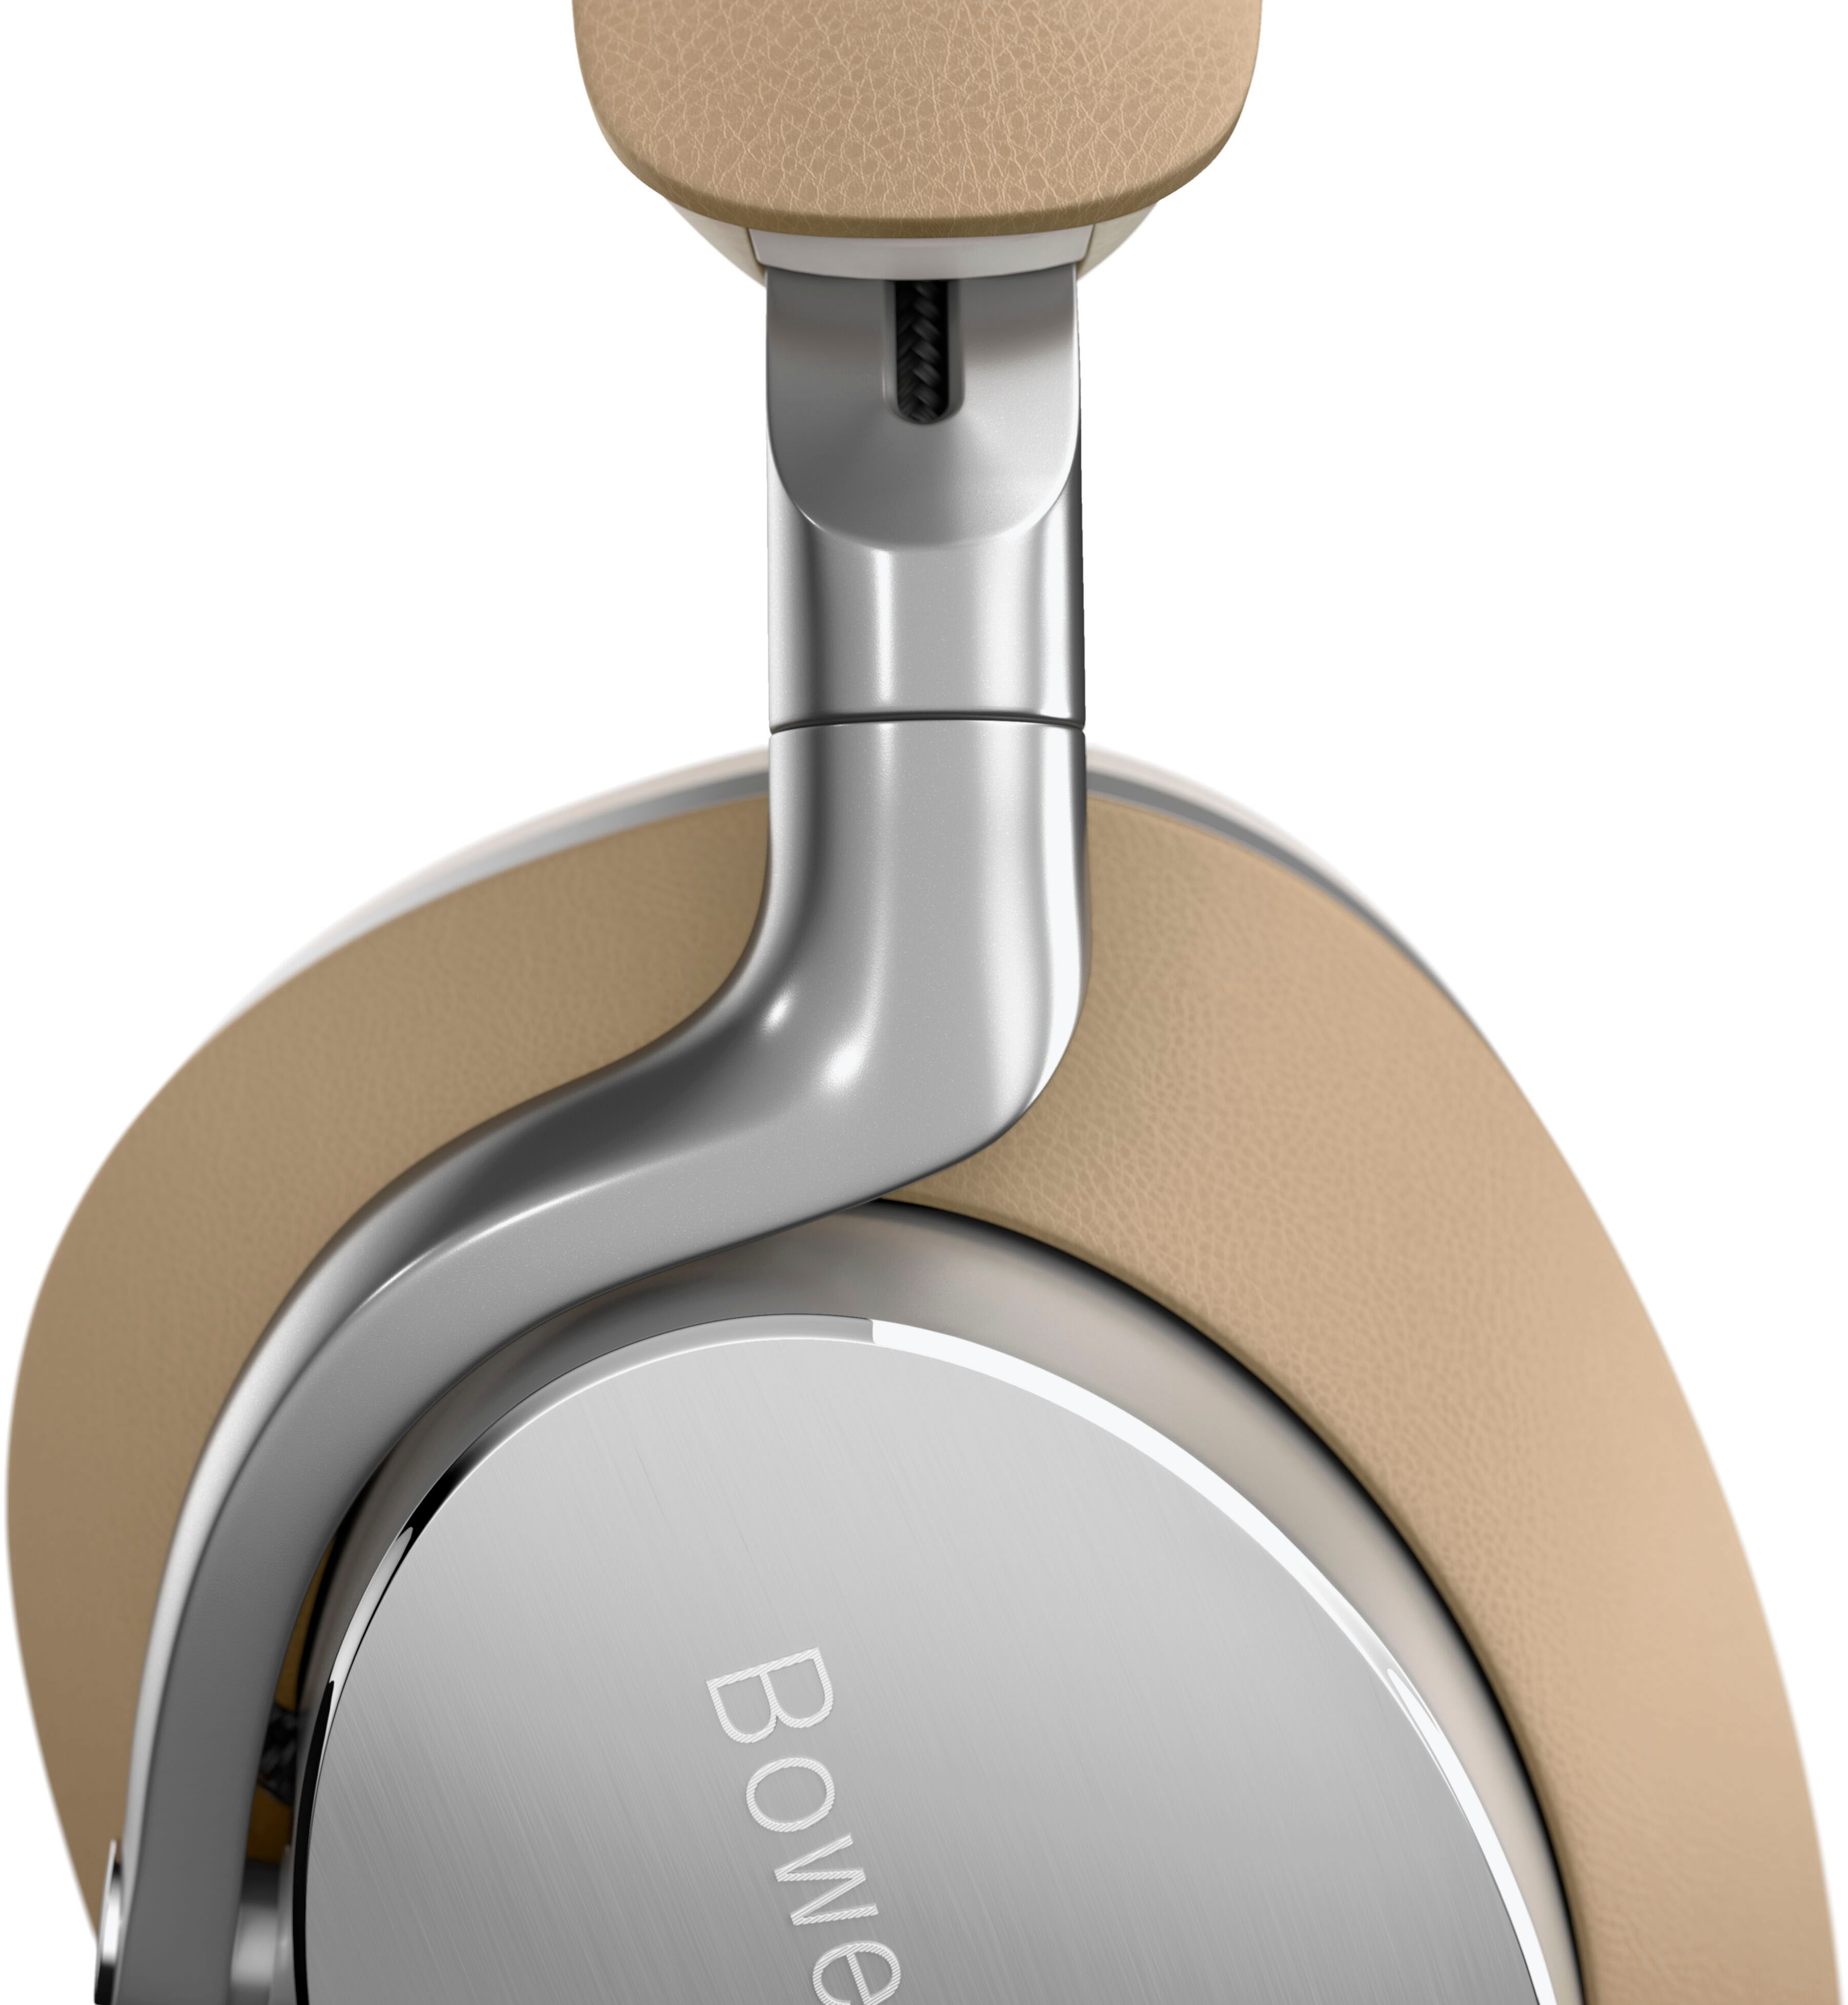 Bowers & Wilkins Px8 wireless over-ear noise-canceling headphone review |  CNN Underscored